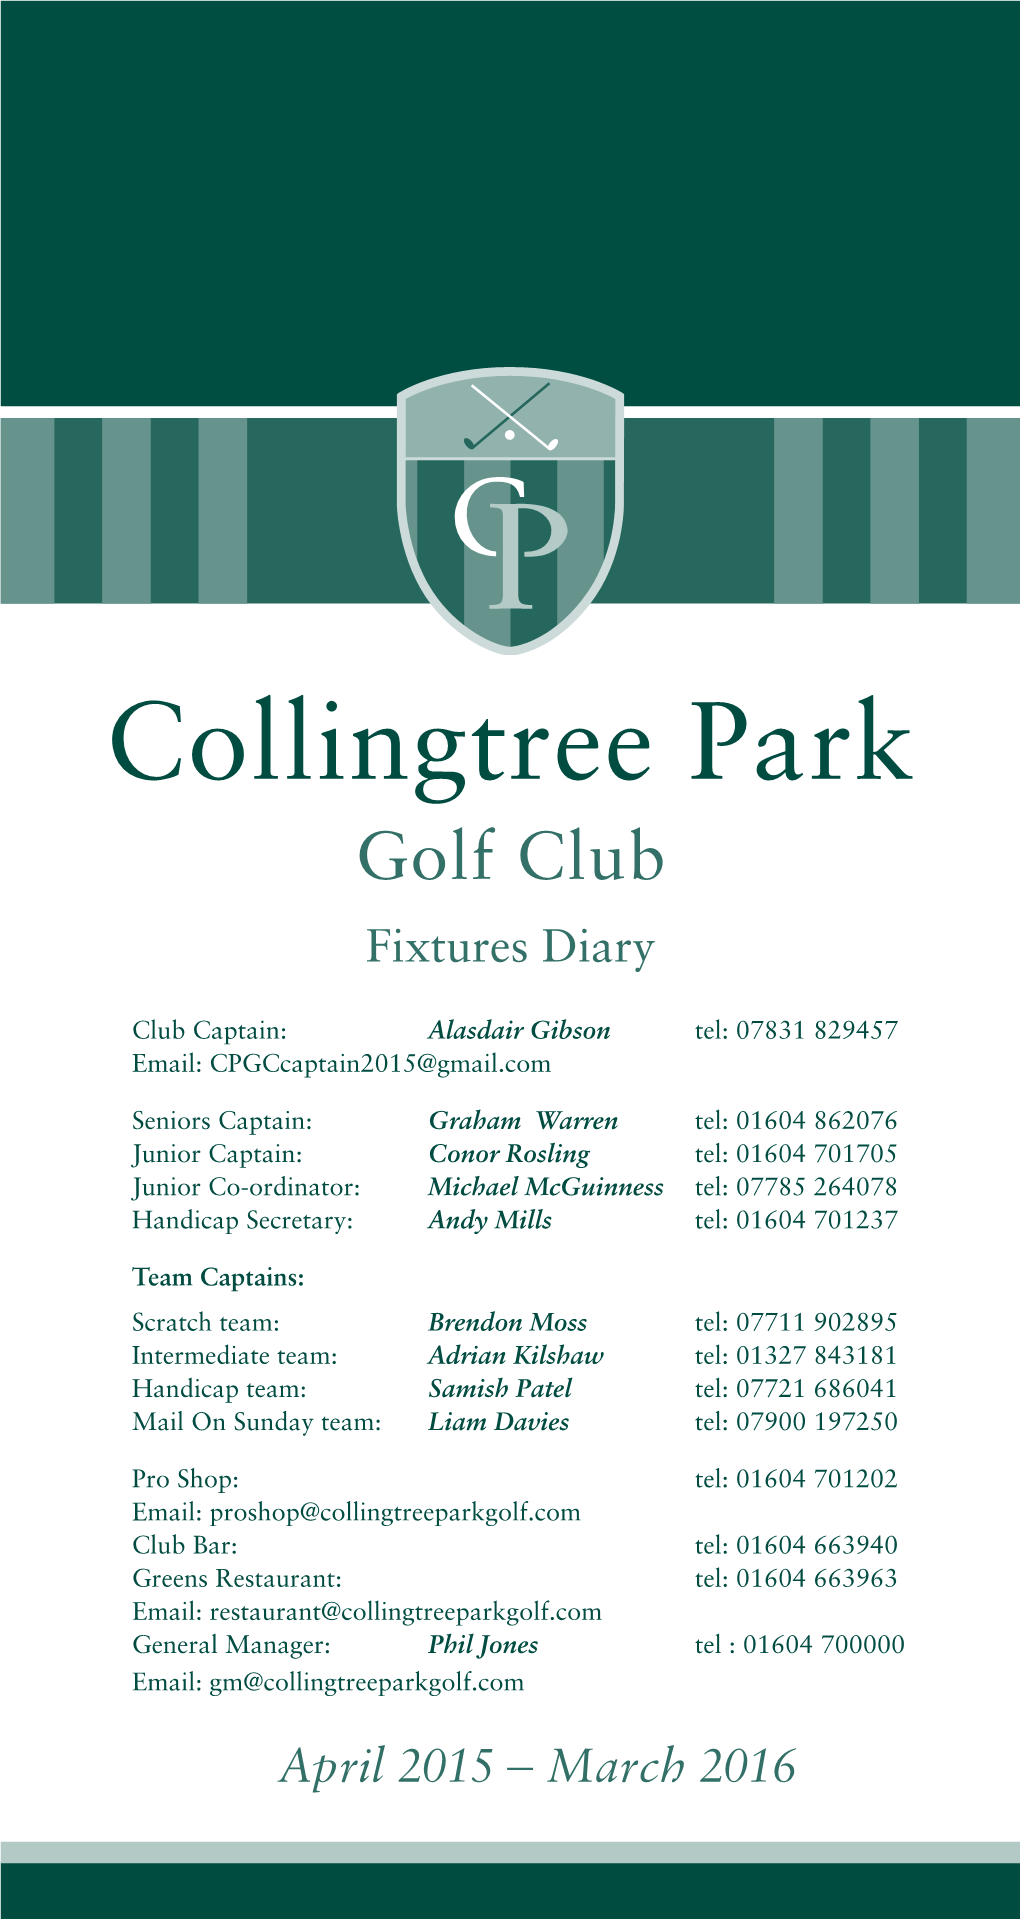 Collingtree Park Golf Club Fixtures Diary